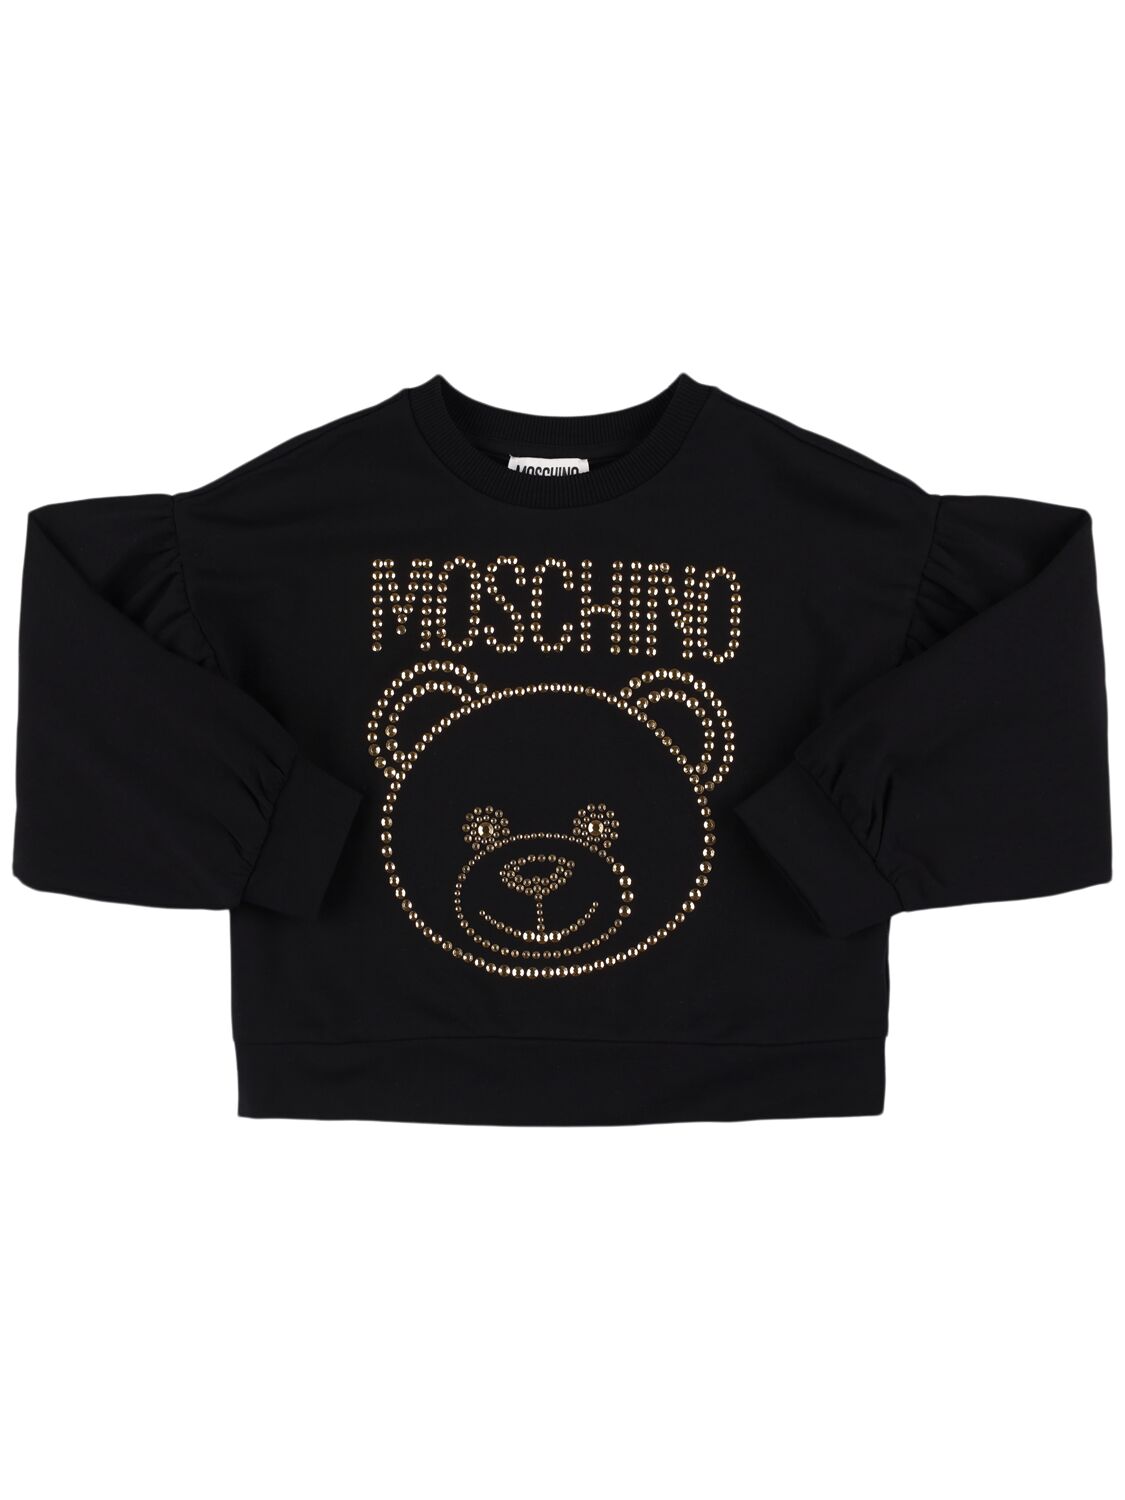 Moschino Kids' Cotton Crewneck Sweatshirt In Black